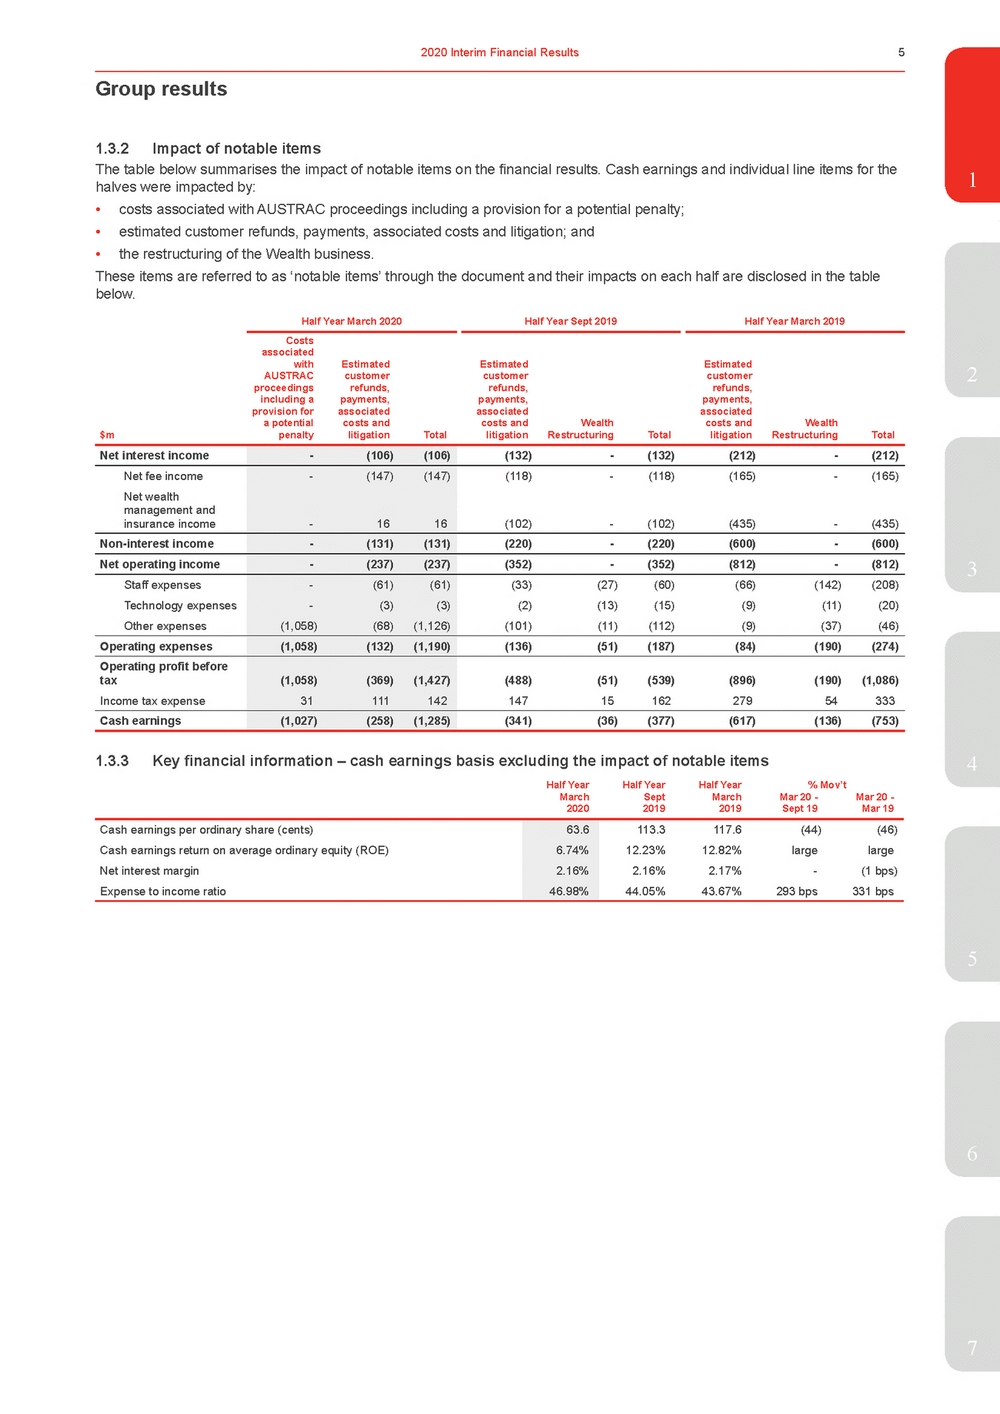 11676-3-ex1_westpac 2020 interim financial results announcement_page_010.jpg